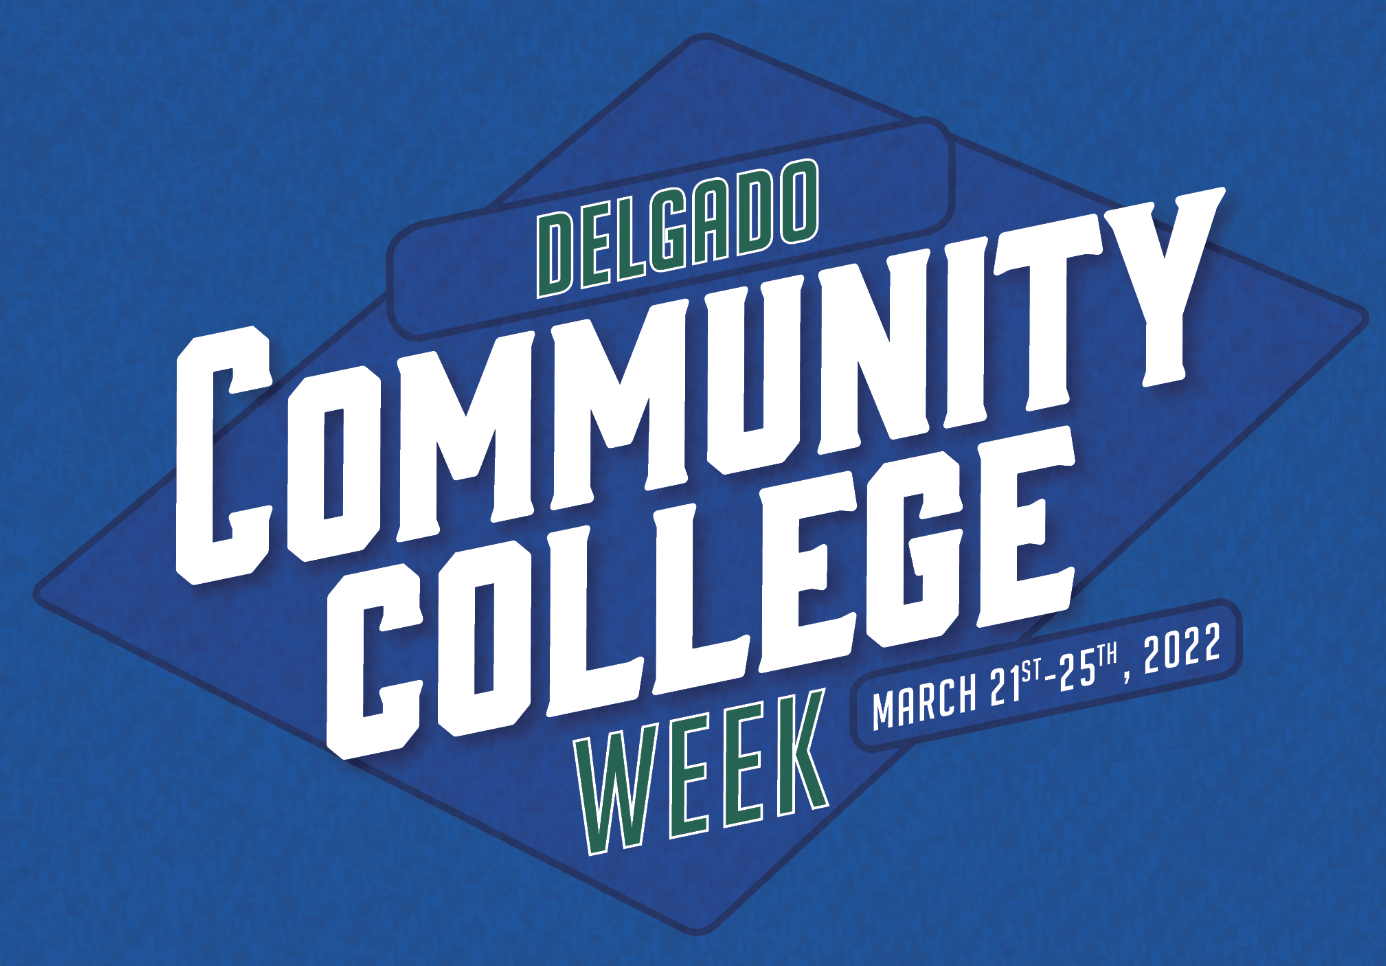 community college week event logo-Delgado Community college week March 21st-25th, 2022